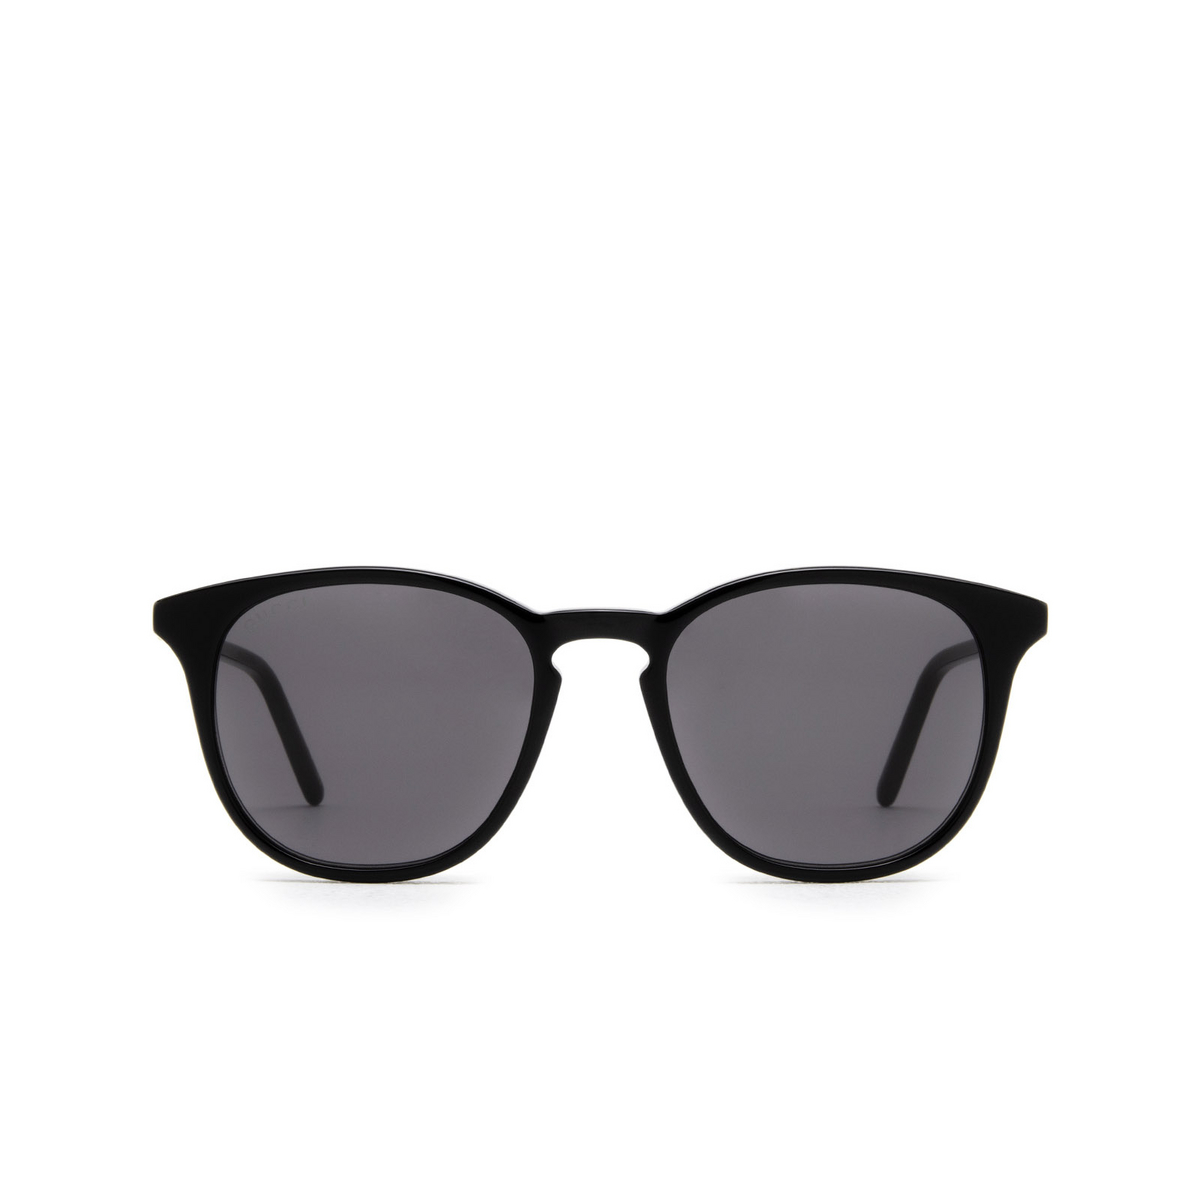 Gucci® Round Sunglasses: GG1157S color Black 001 - front view.